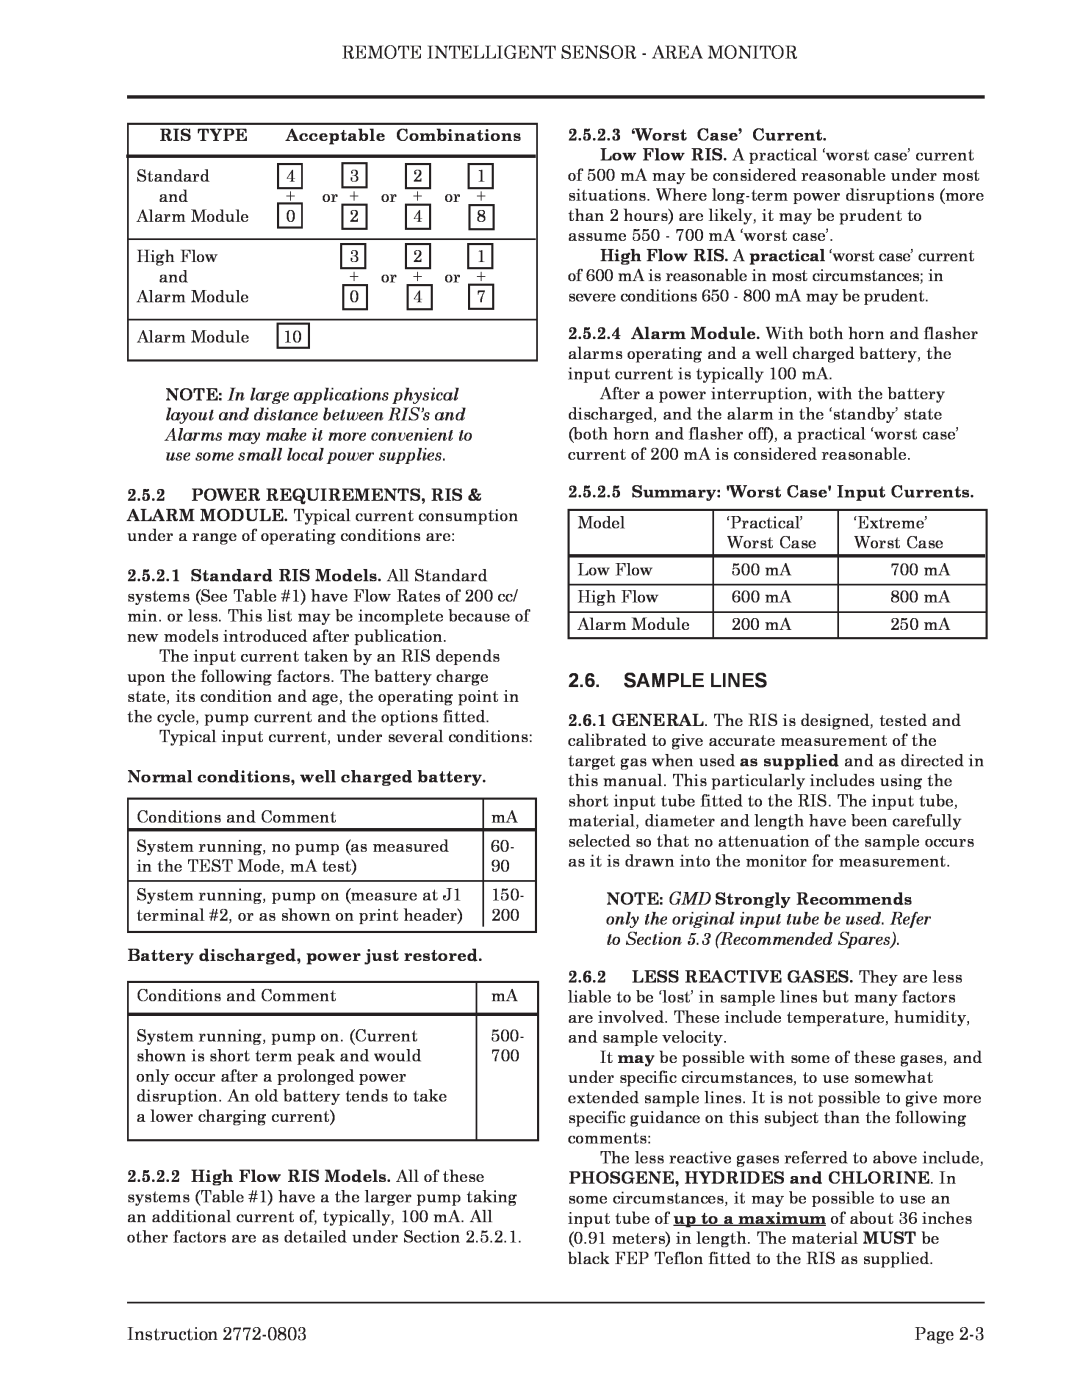 Bacharach 2772-0803 manual Sample Lines 